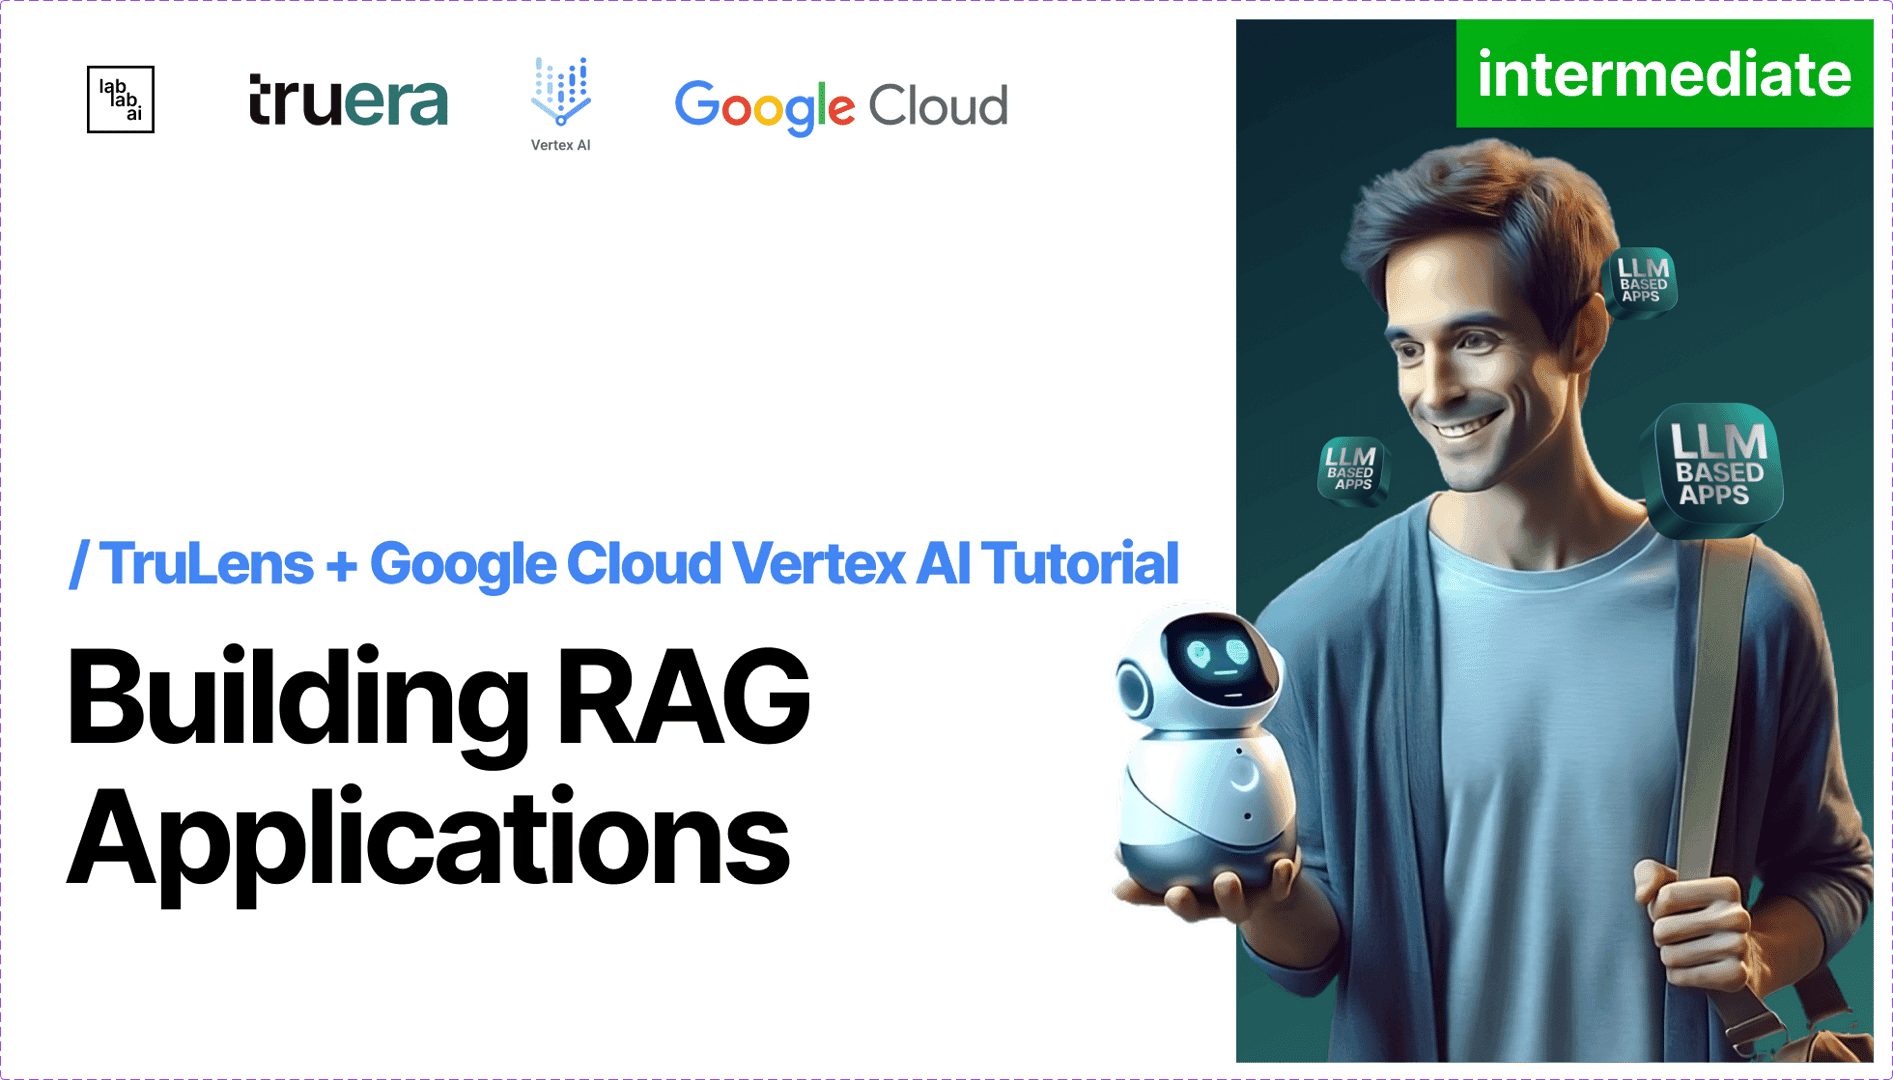 TruLens + Google Cloud Vertex AI Tutorial: Building RAG Applications